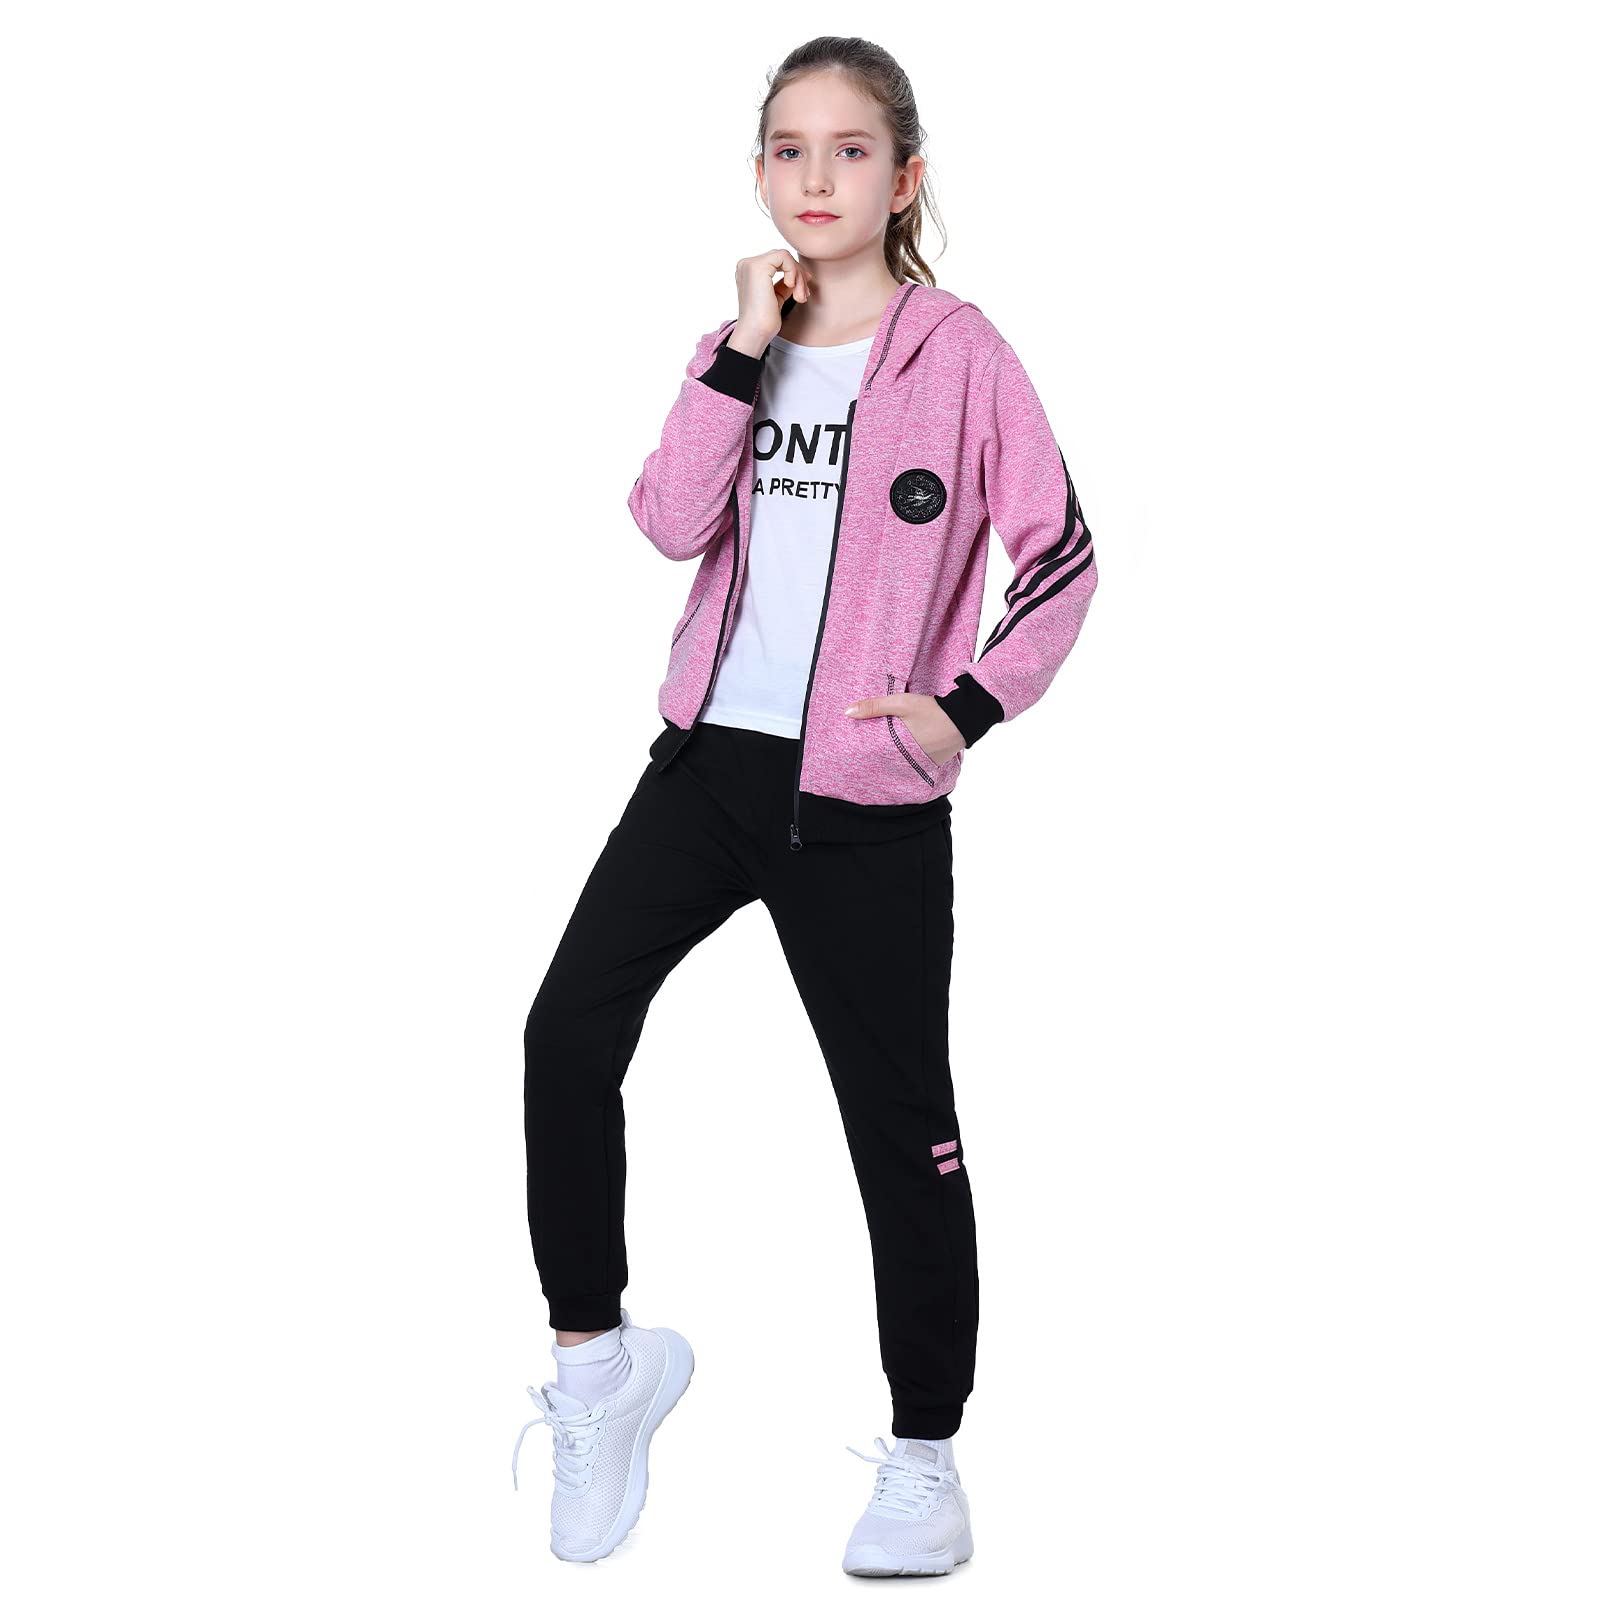 LPATTERN Kinder Mädchen 3tlg Bekleidungsset Sportanzug Trainingsanzug Jogginganzug Freizeitanzug Outfit-Set(Langarmshirt+ Kapuzenjacke+ Sporthose), Pink(3-Teilig), 116(Label:120)